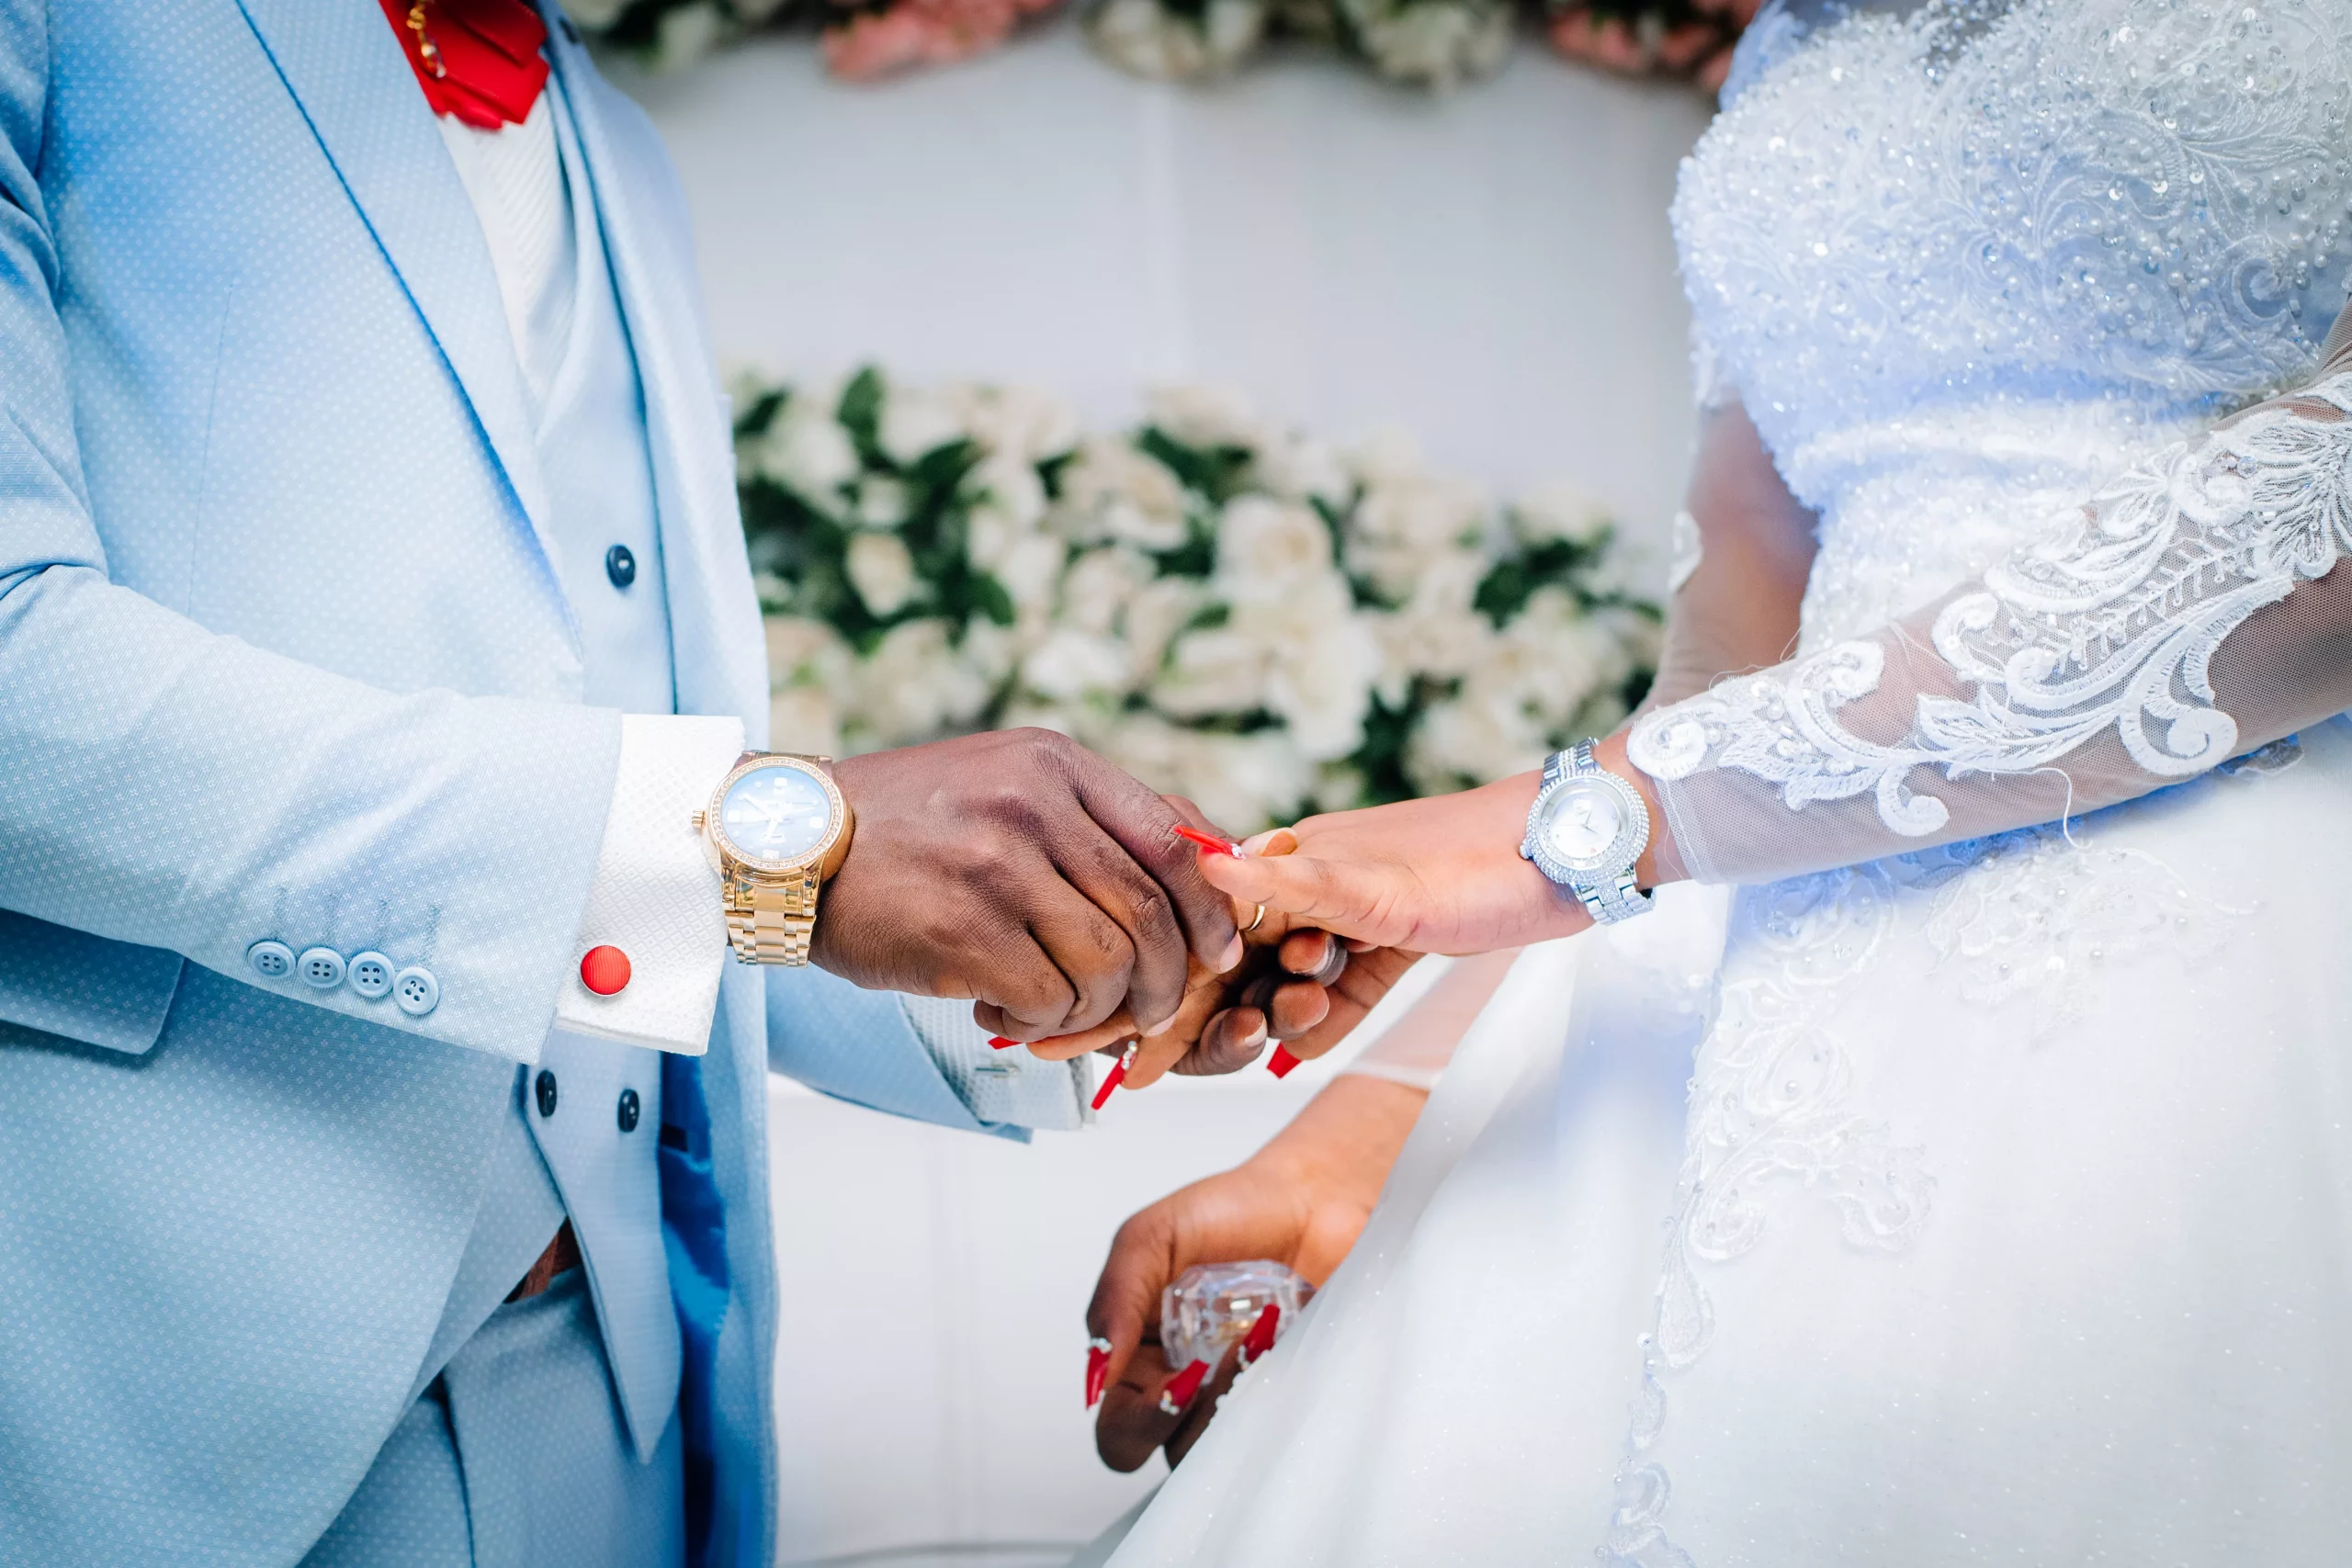 exchange of wedding rings at a nigerian wedding 3